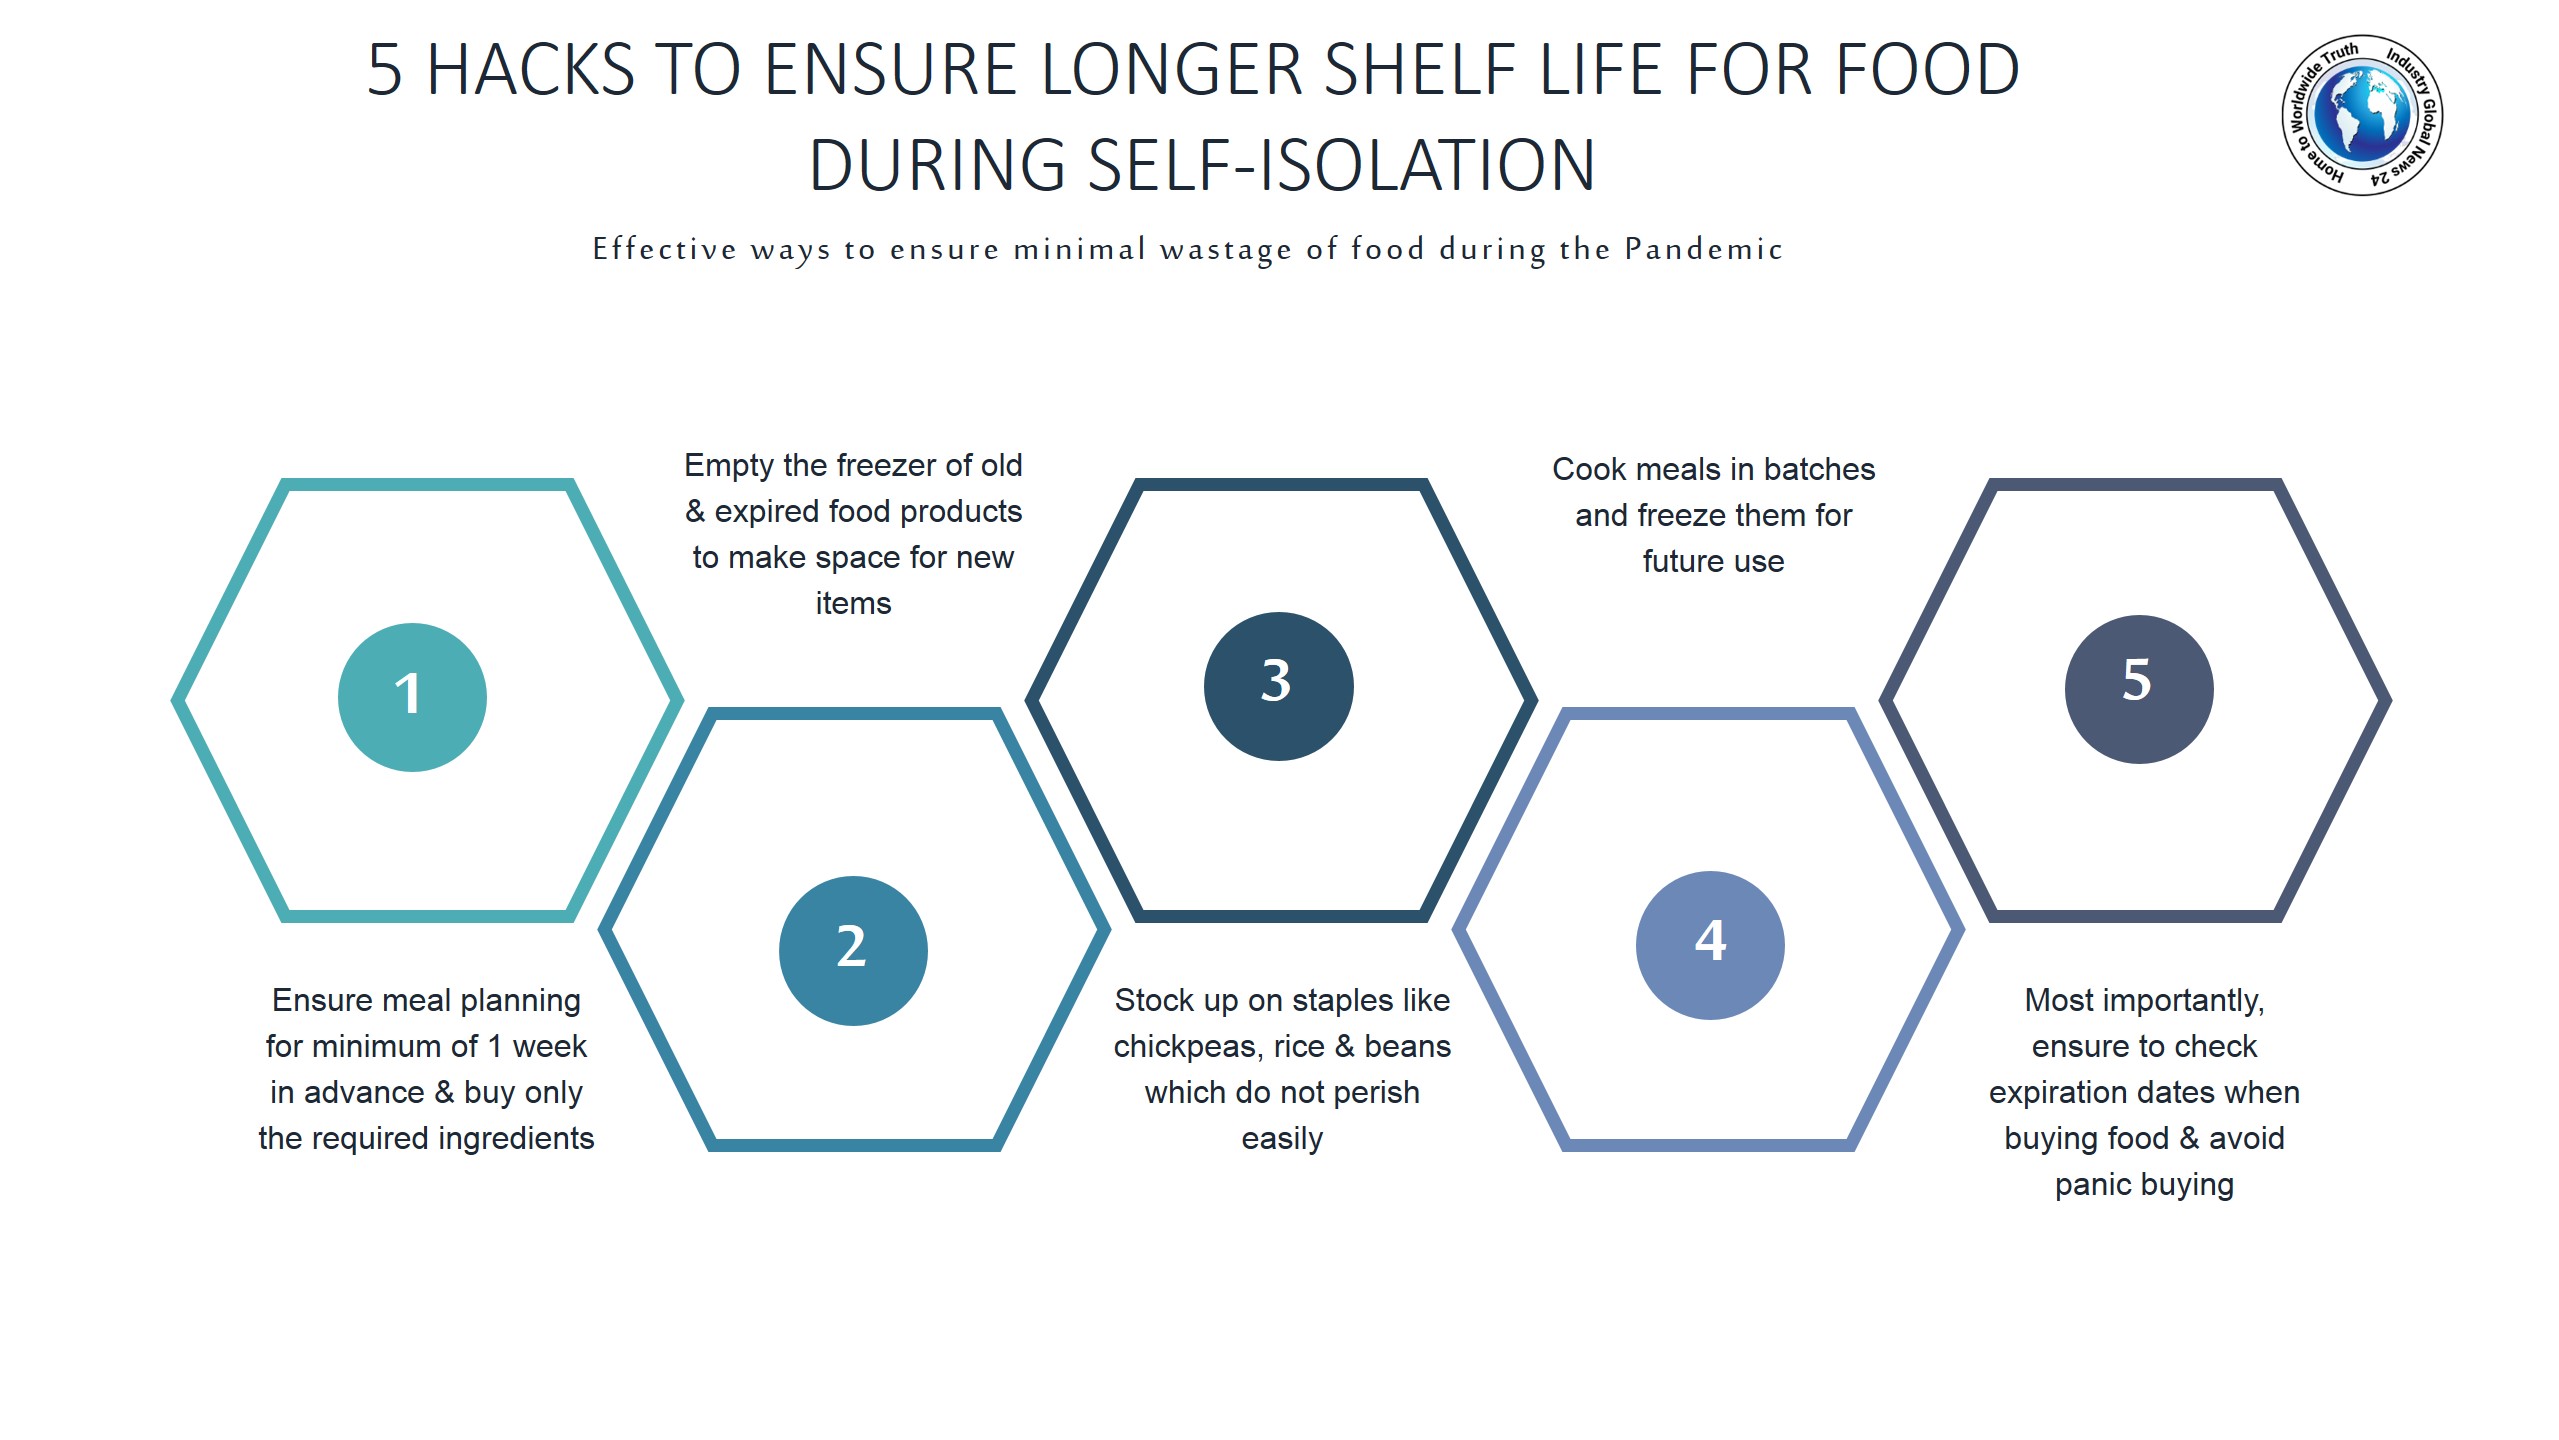 5 hacks to ensure longer shelf life for food during self-isolation